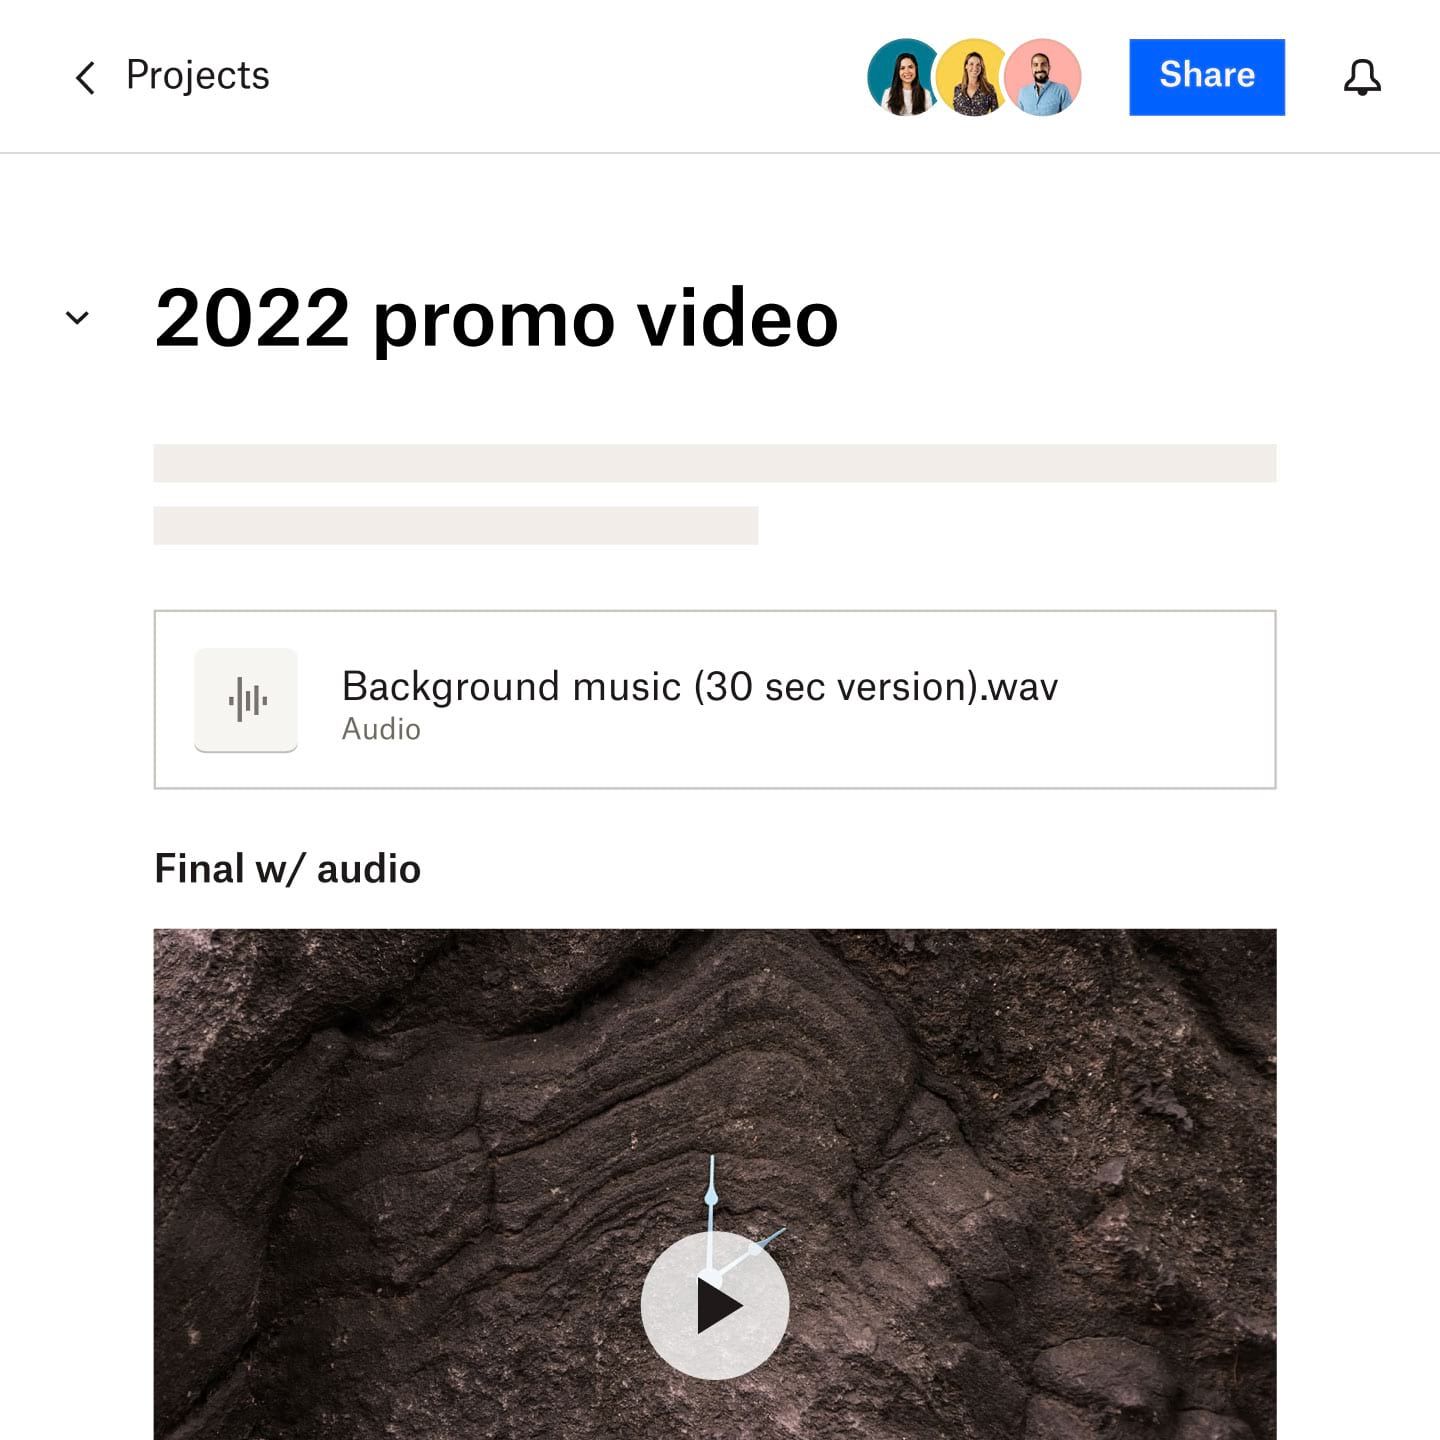 「2022 promo video」という見出し、動画で使用されている音声ファイルへのリンク、完成した動画の部分的なスクリーンショットを含む Dropbox Paper ドキュメント